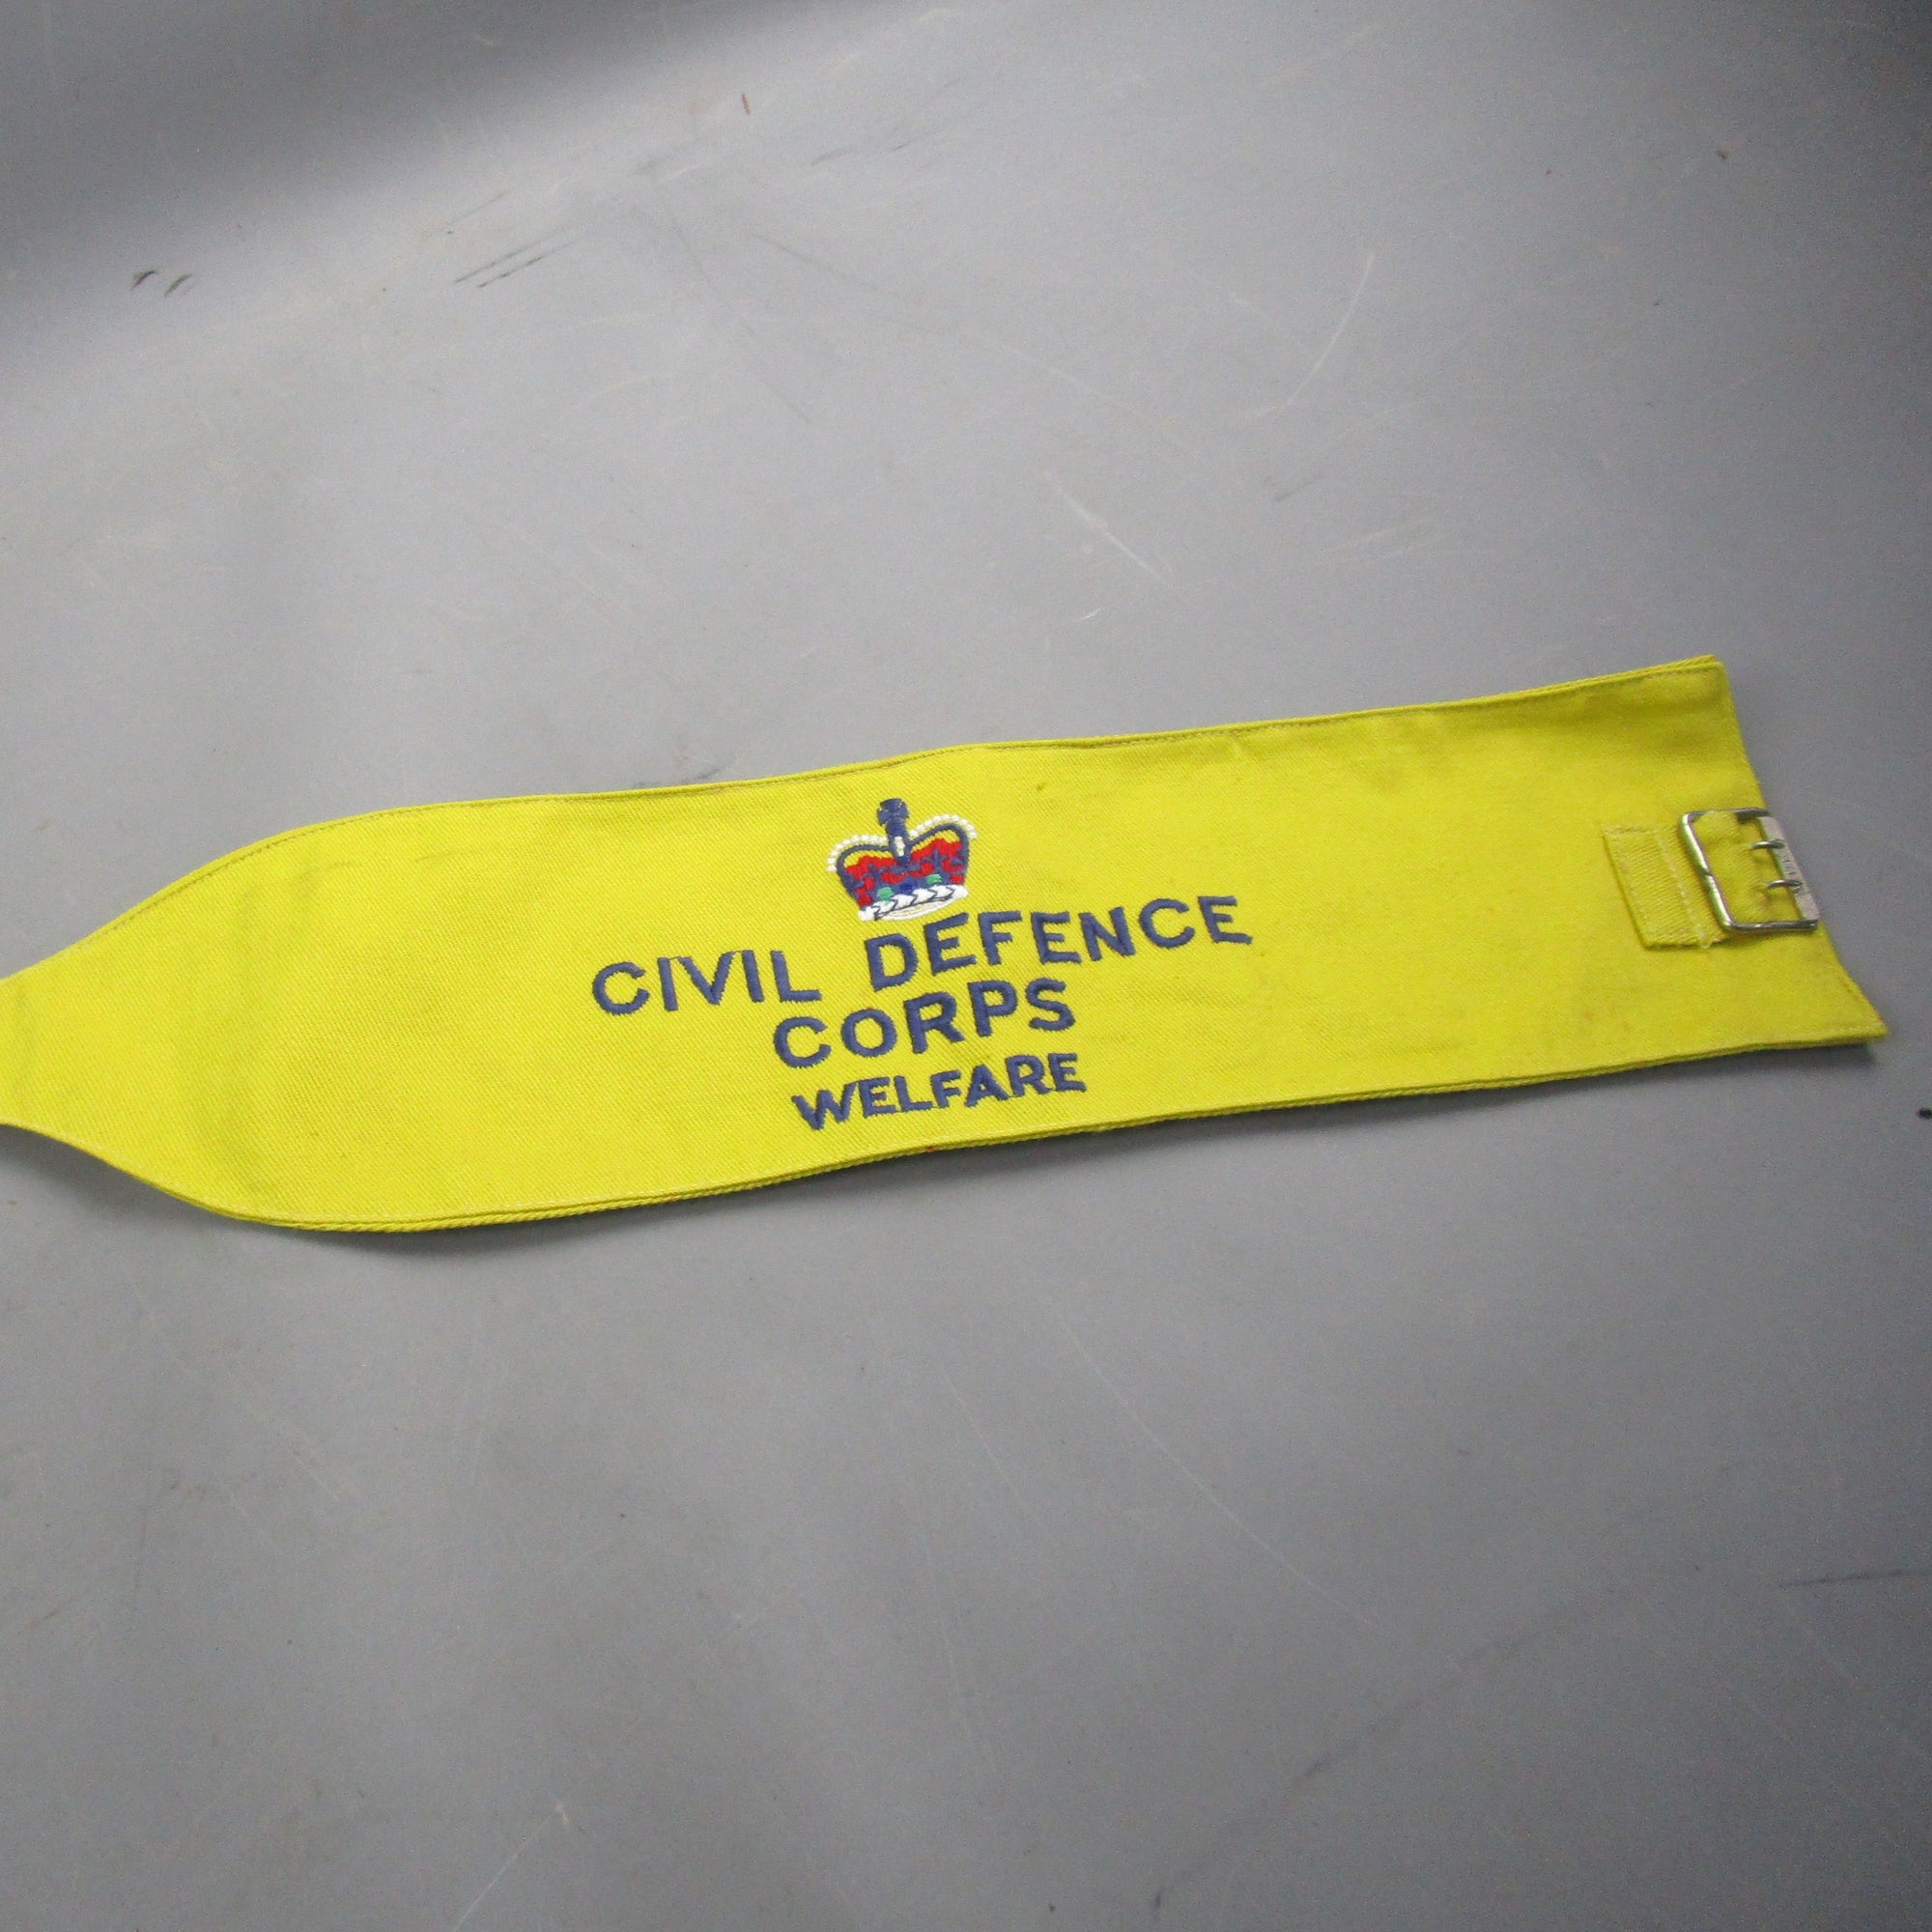 Civil Defence Corps Welfare Yellow Arm Band Vintage c1940